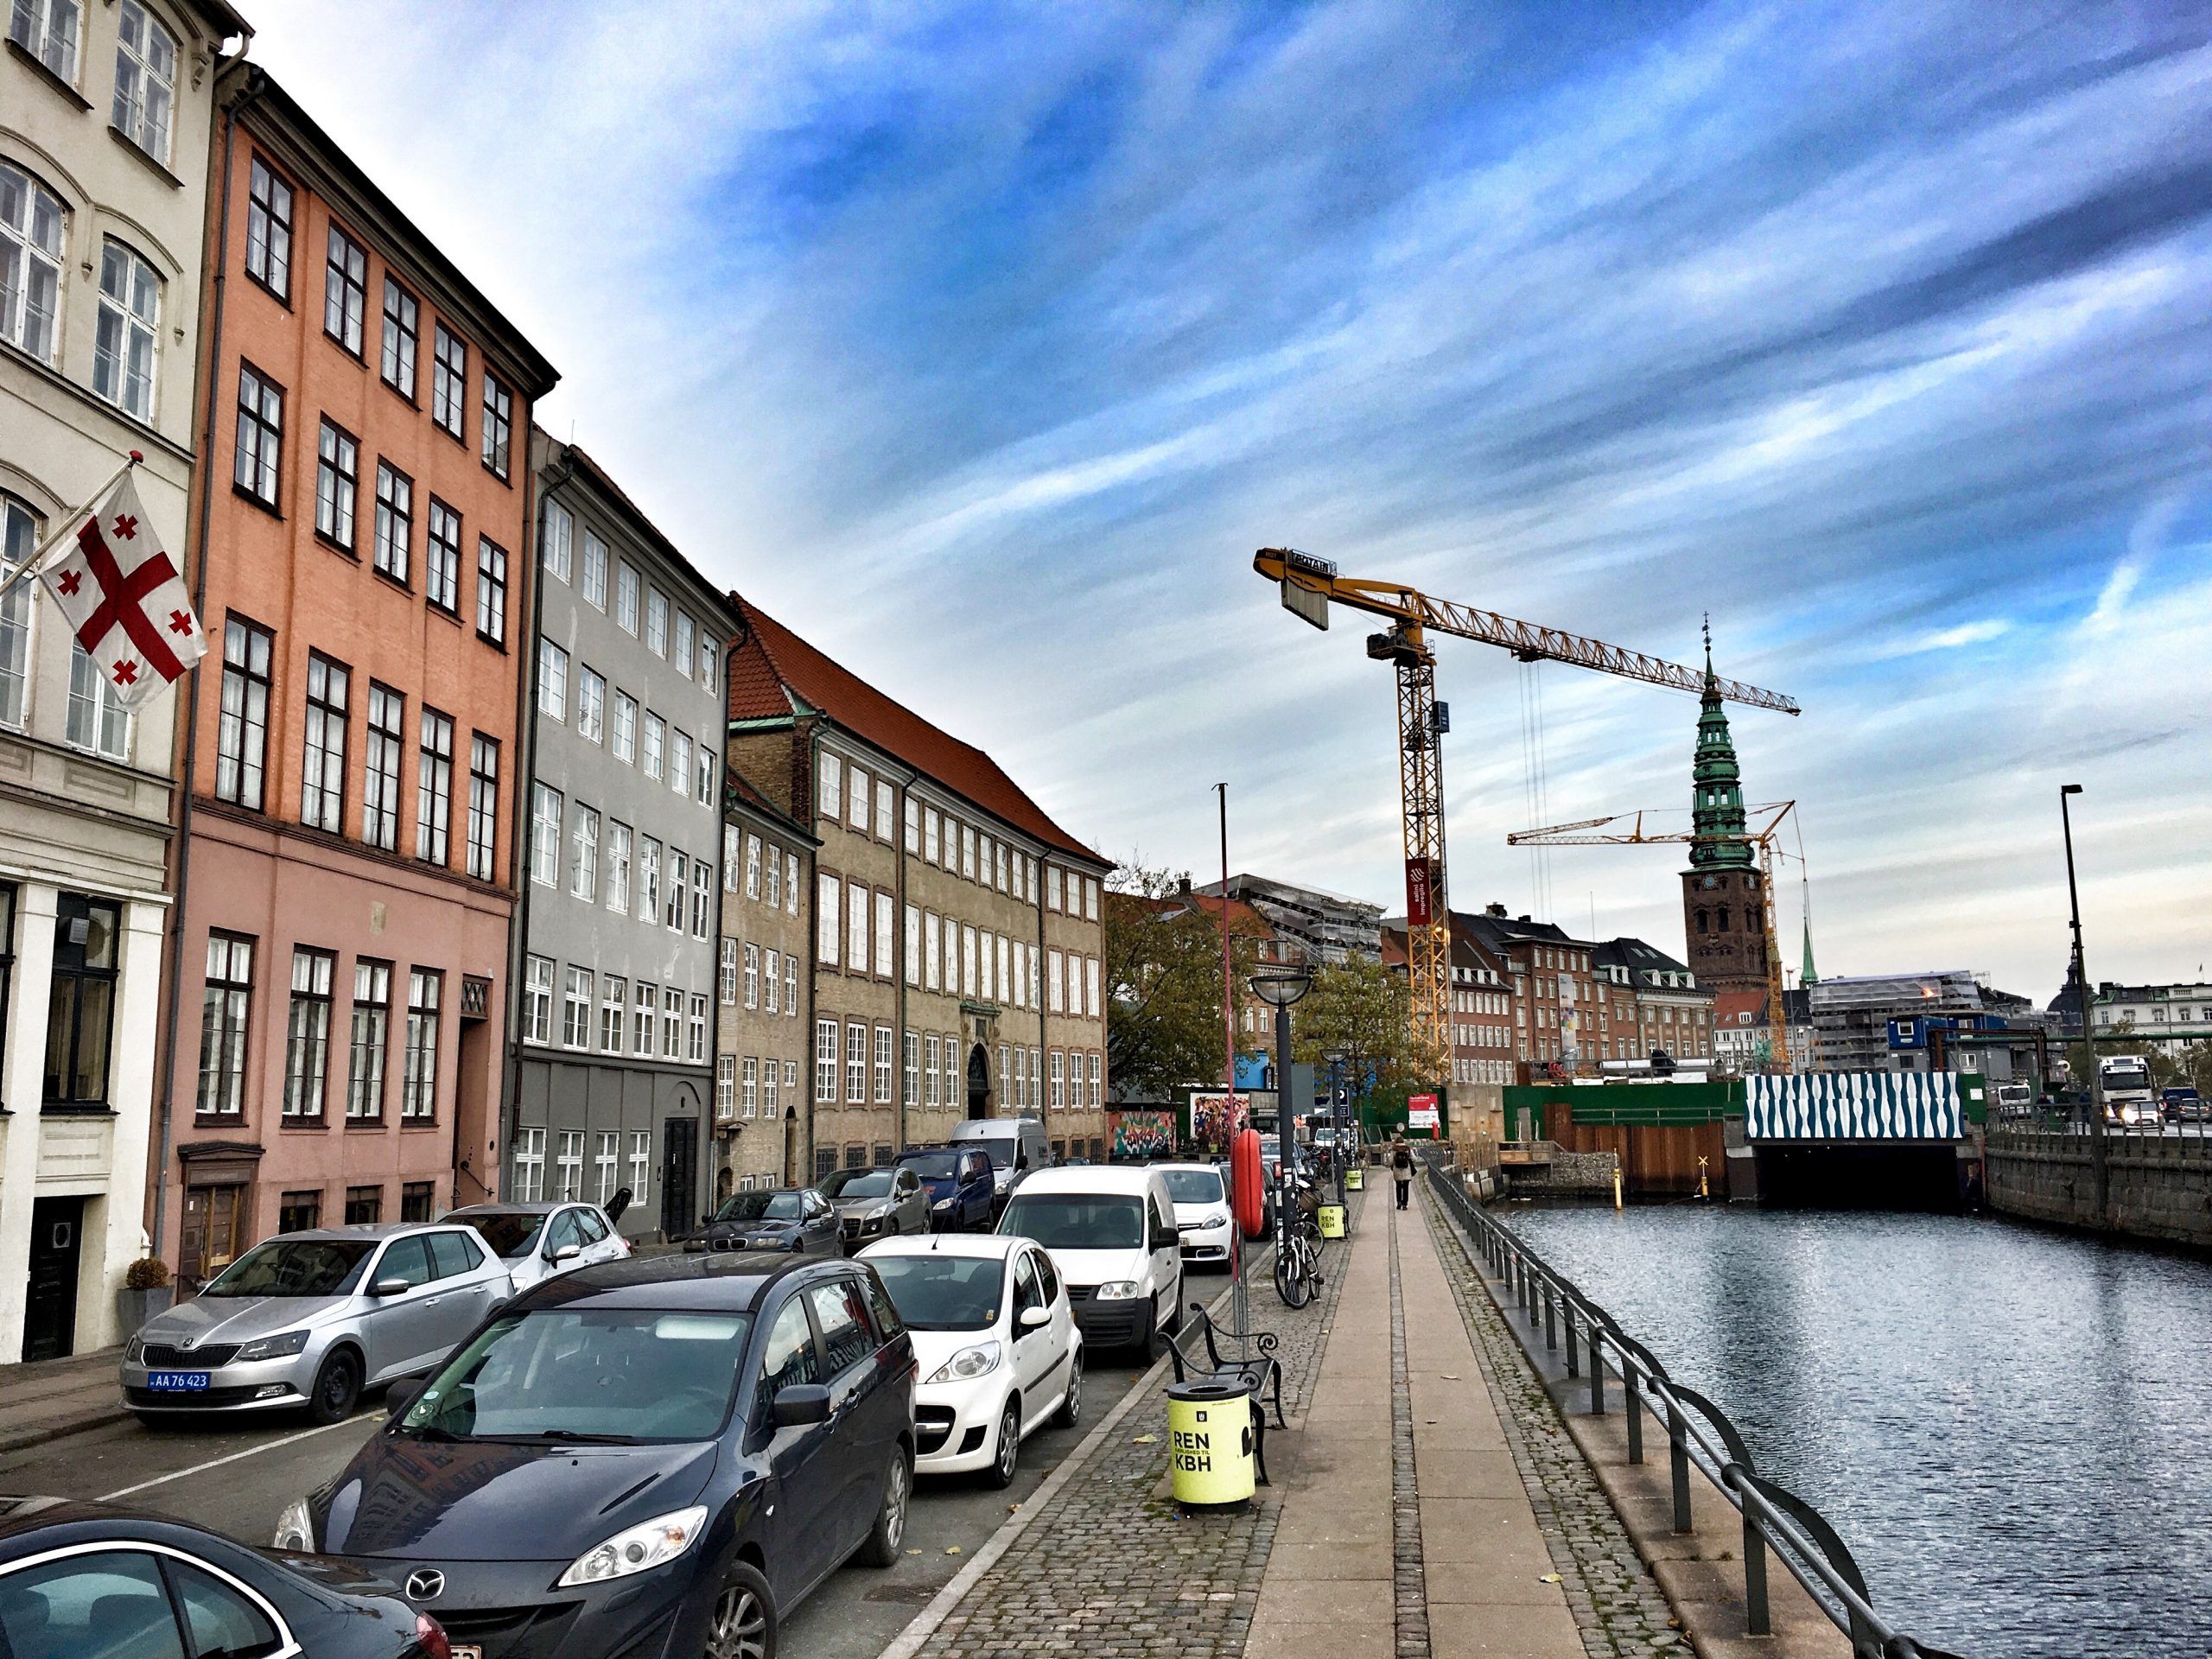 Copenhagen feels left out of huge infrastructure plans